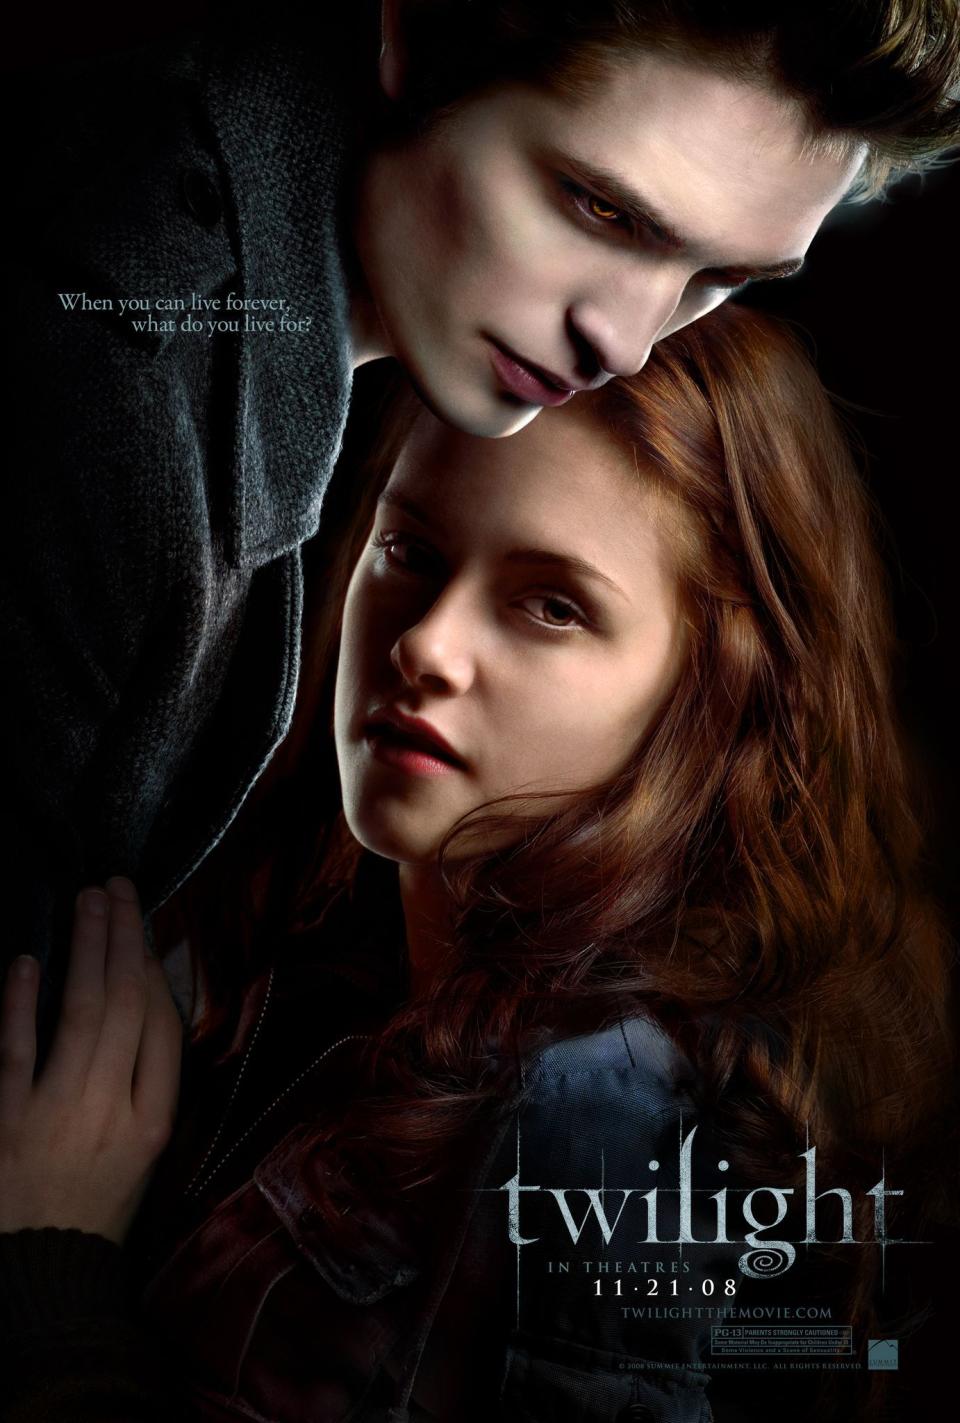 15) Twilight (2008)